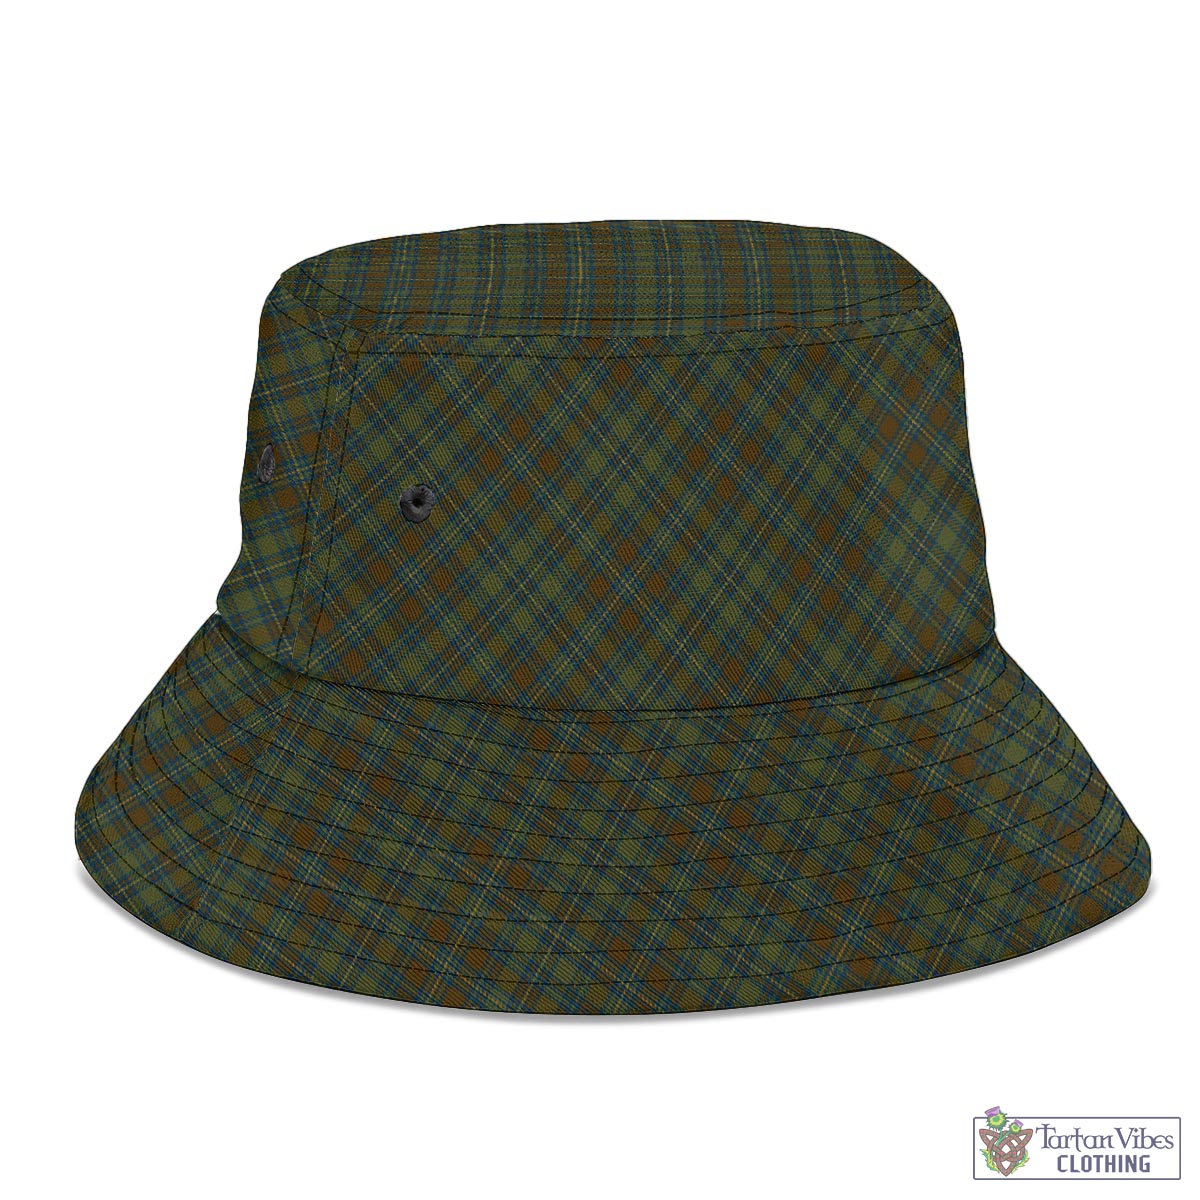 Tartan Vibes Clothing Kerry County Ireland Tartan Bucket Hat